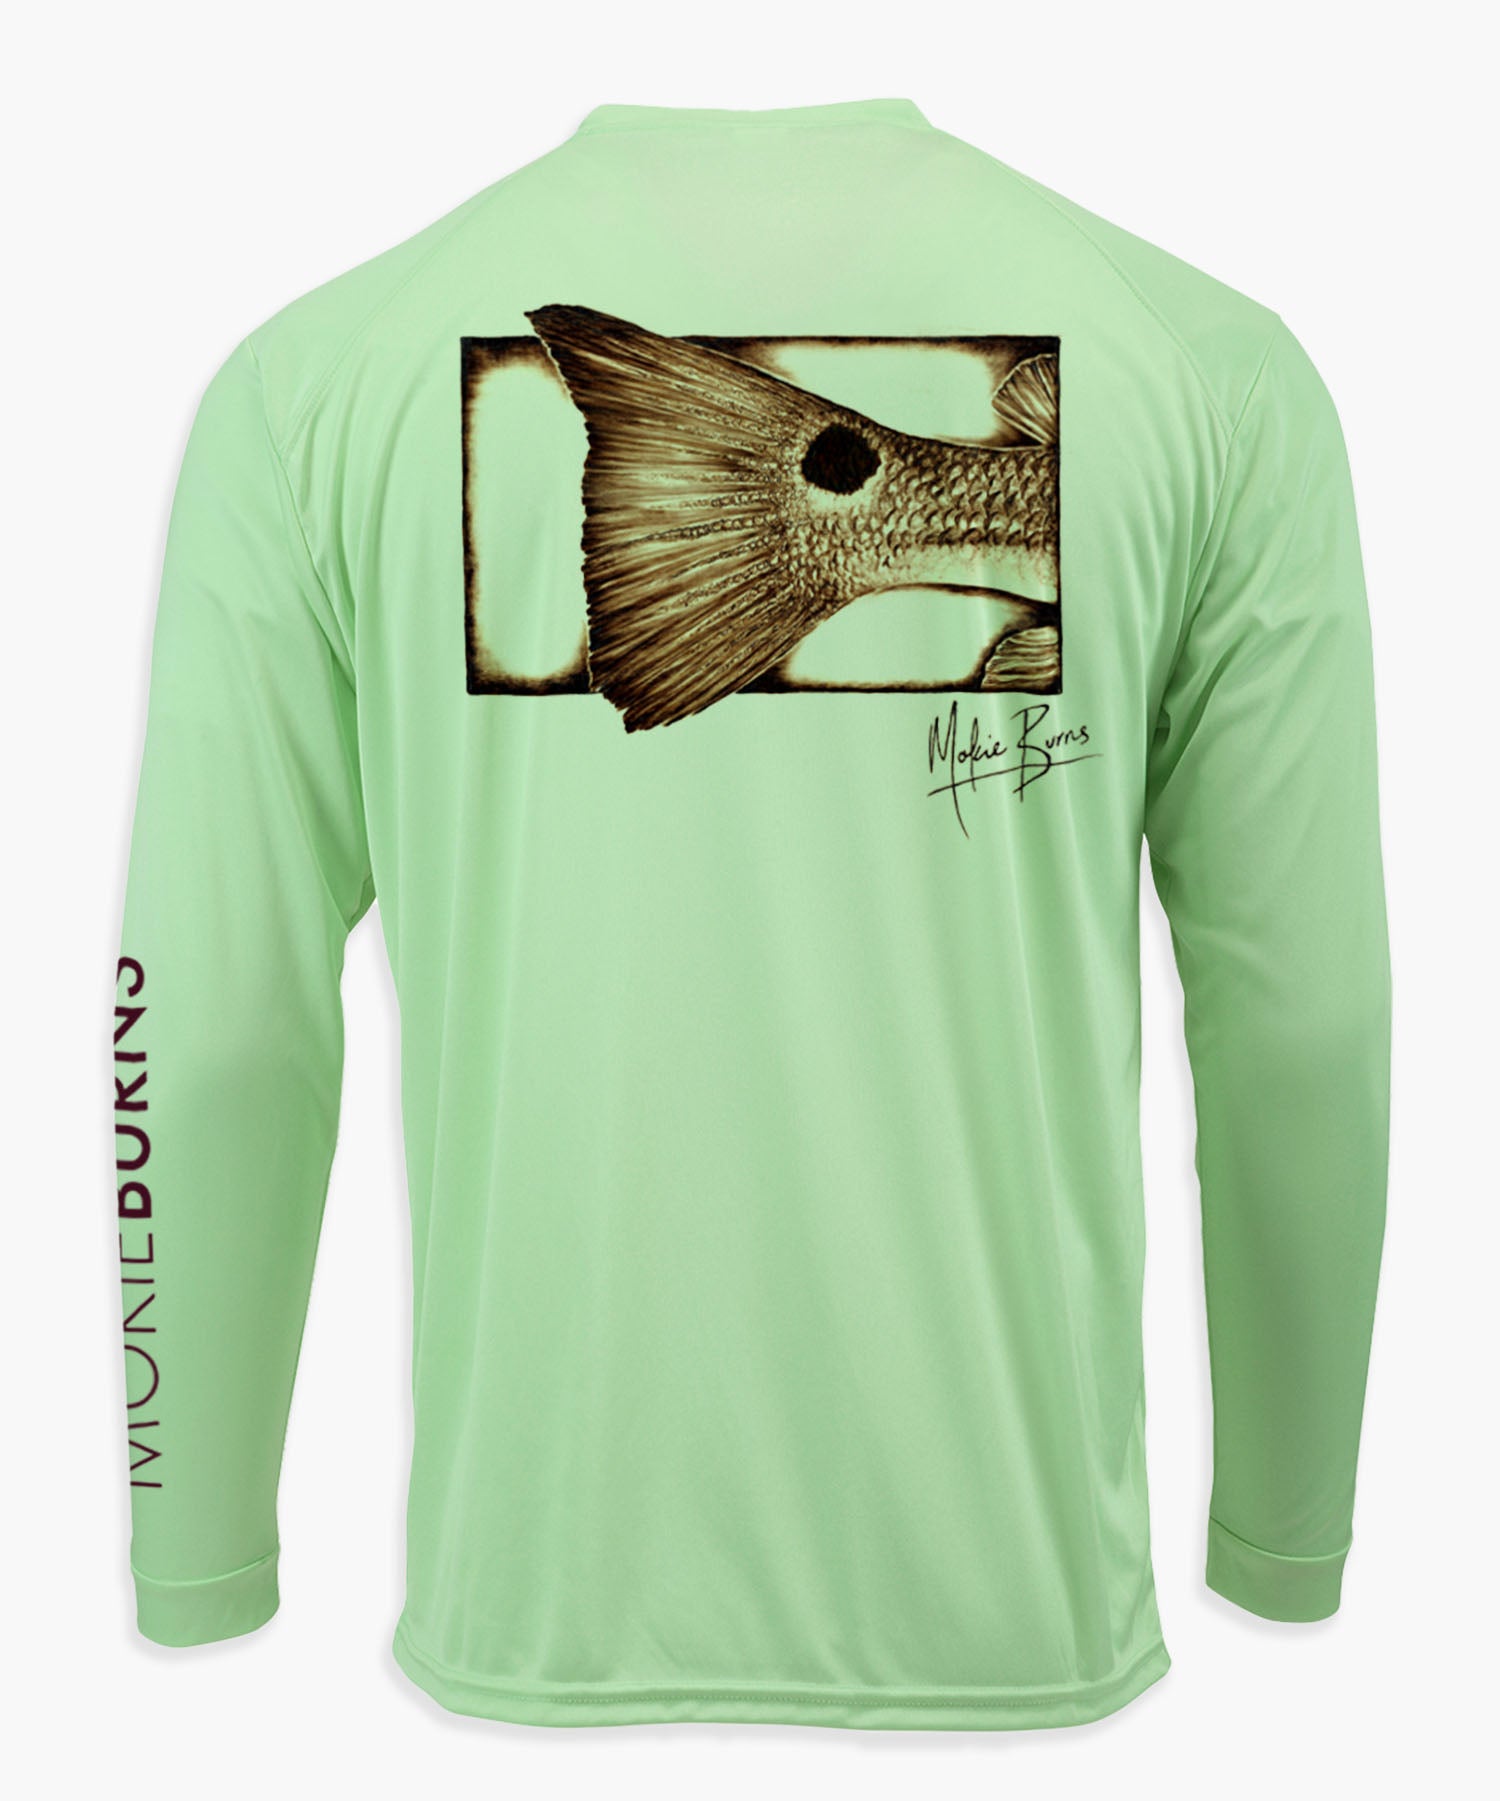 Performance Fishing Shirt Long Sleeve UPF 50+ (Redfish), XXL